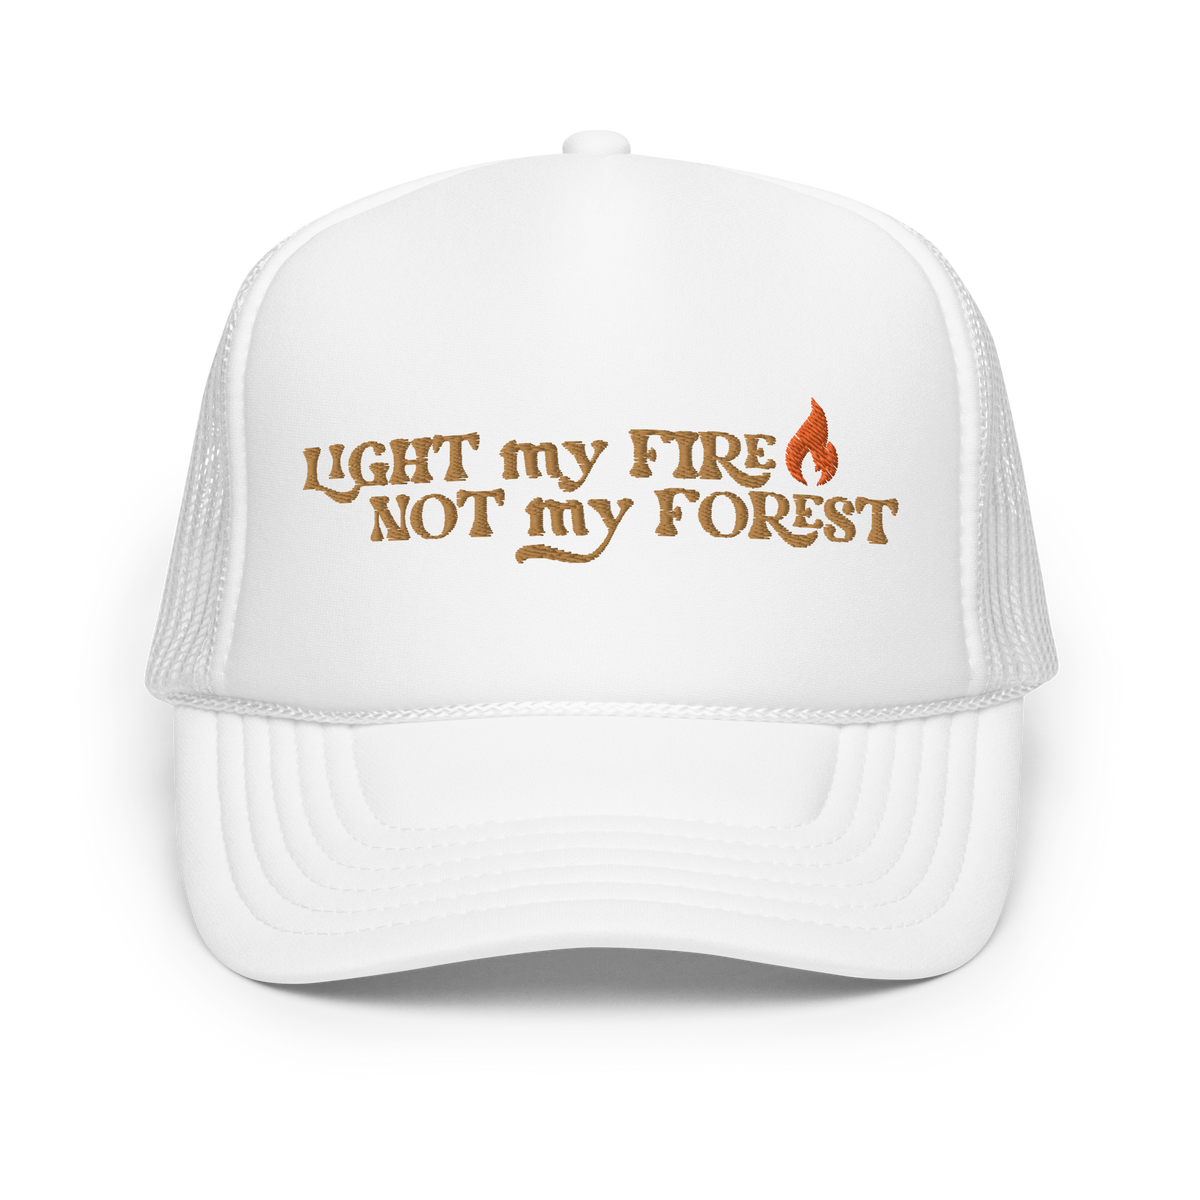 LIGHT MY FIRE retro trucker hat